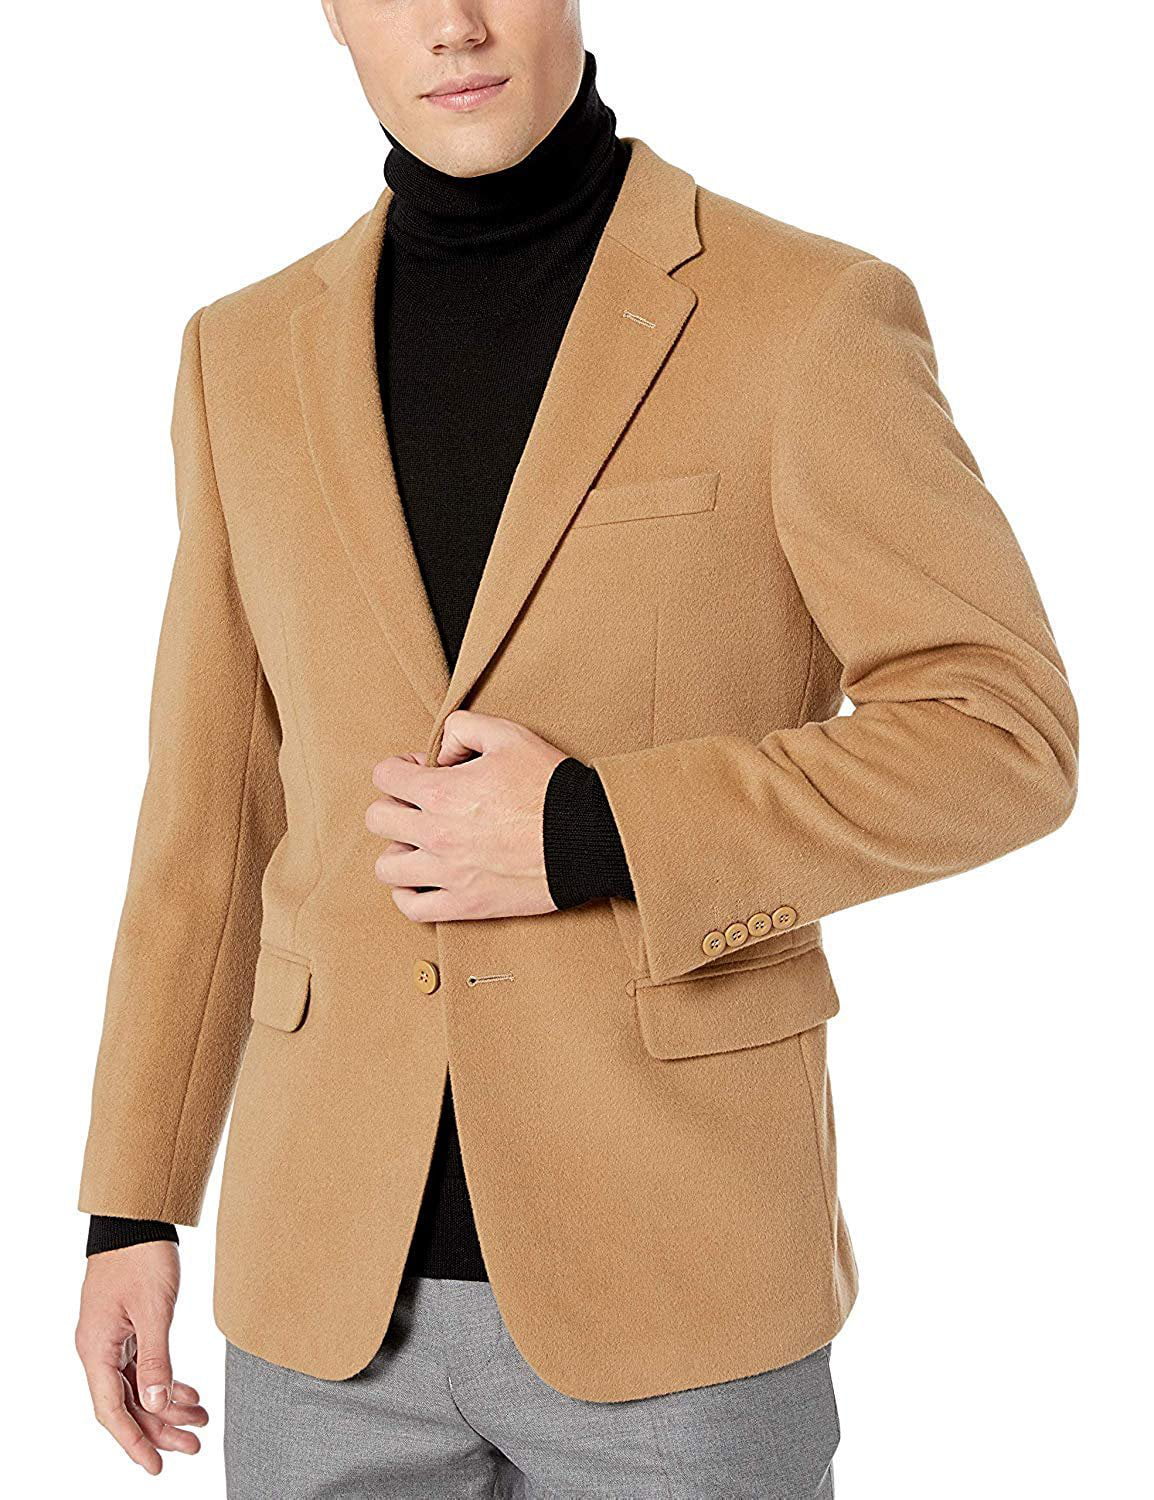 Prontomoda Men's 2 Button Luxury Wool Cashmere Sport Coat - Camel - 52L